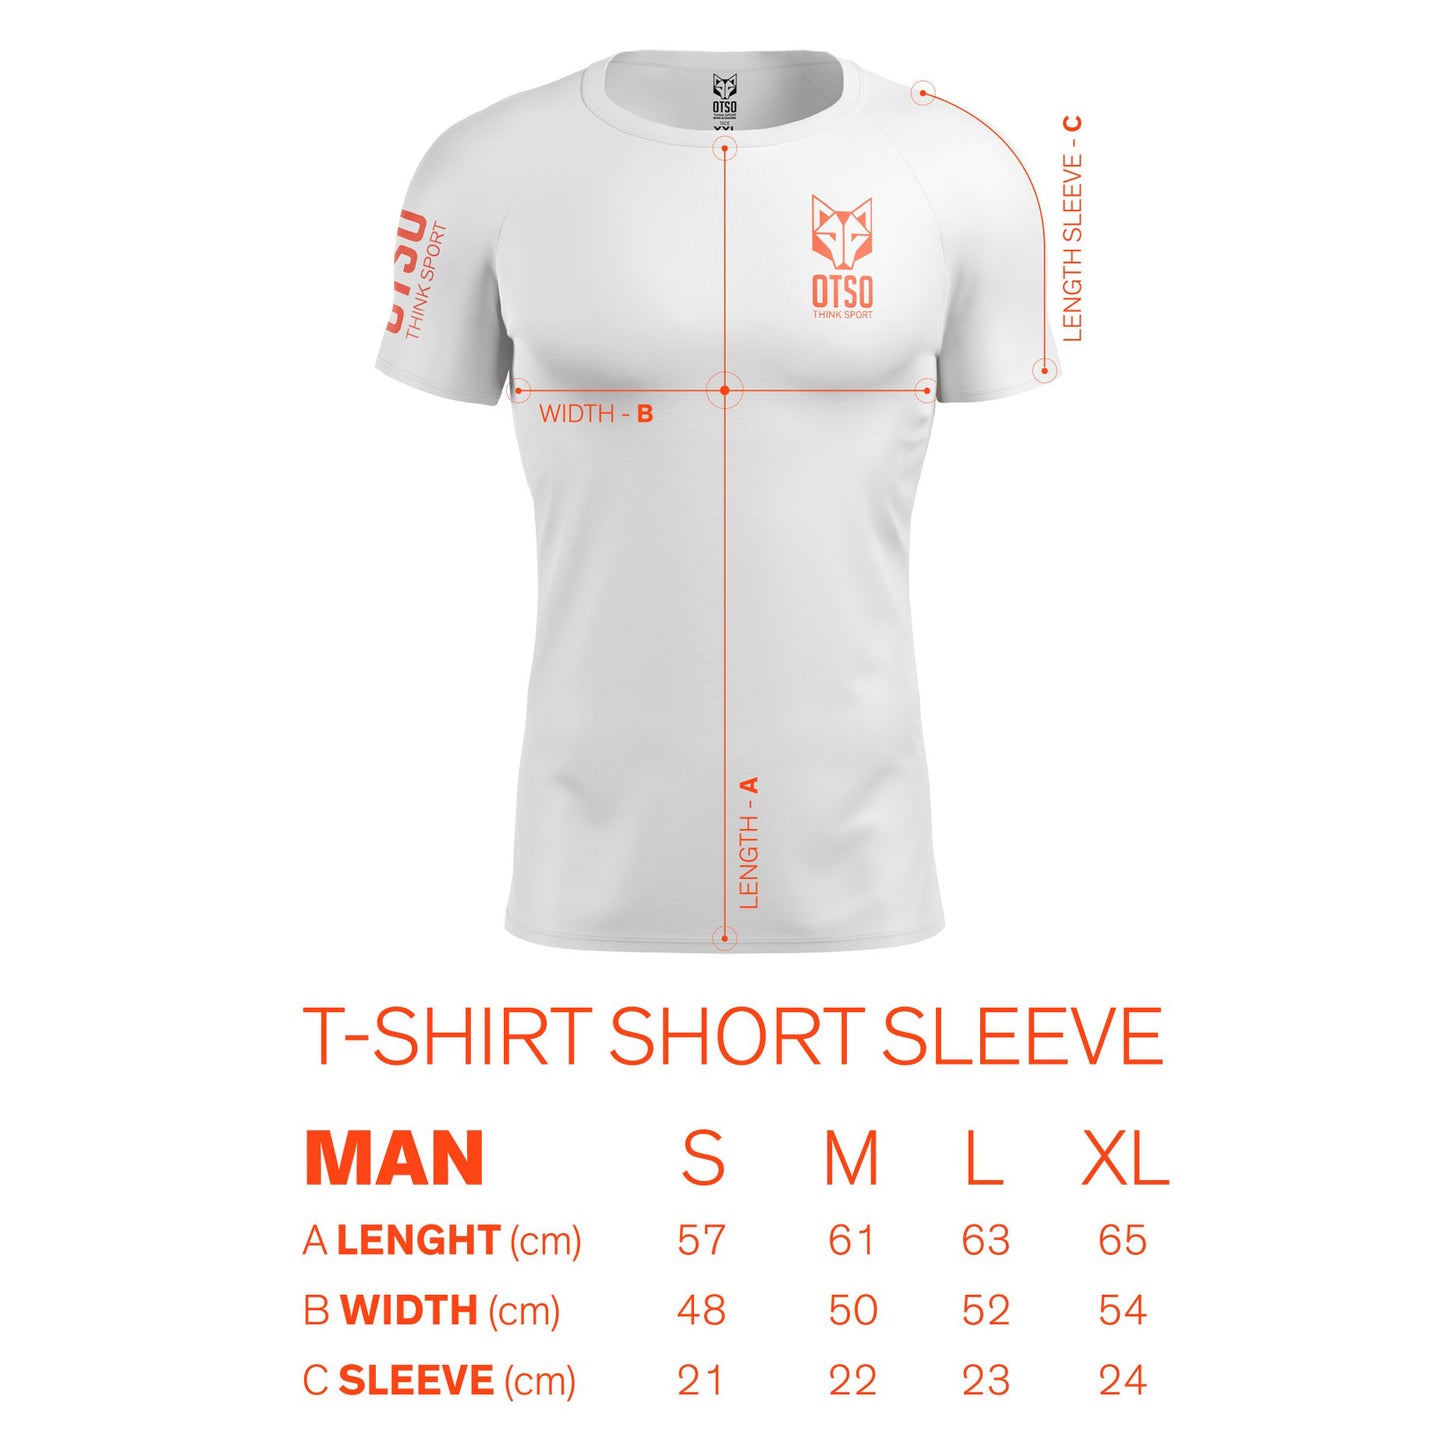 Camiseta manga corta hombre - Iten